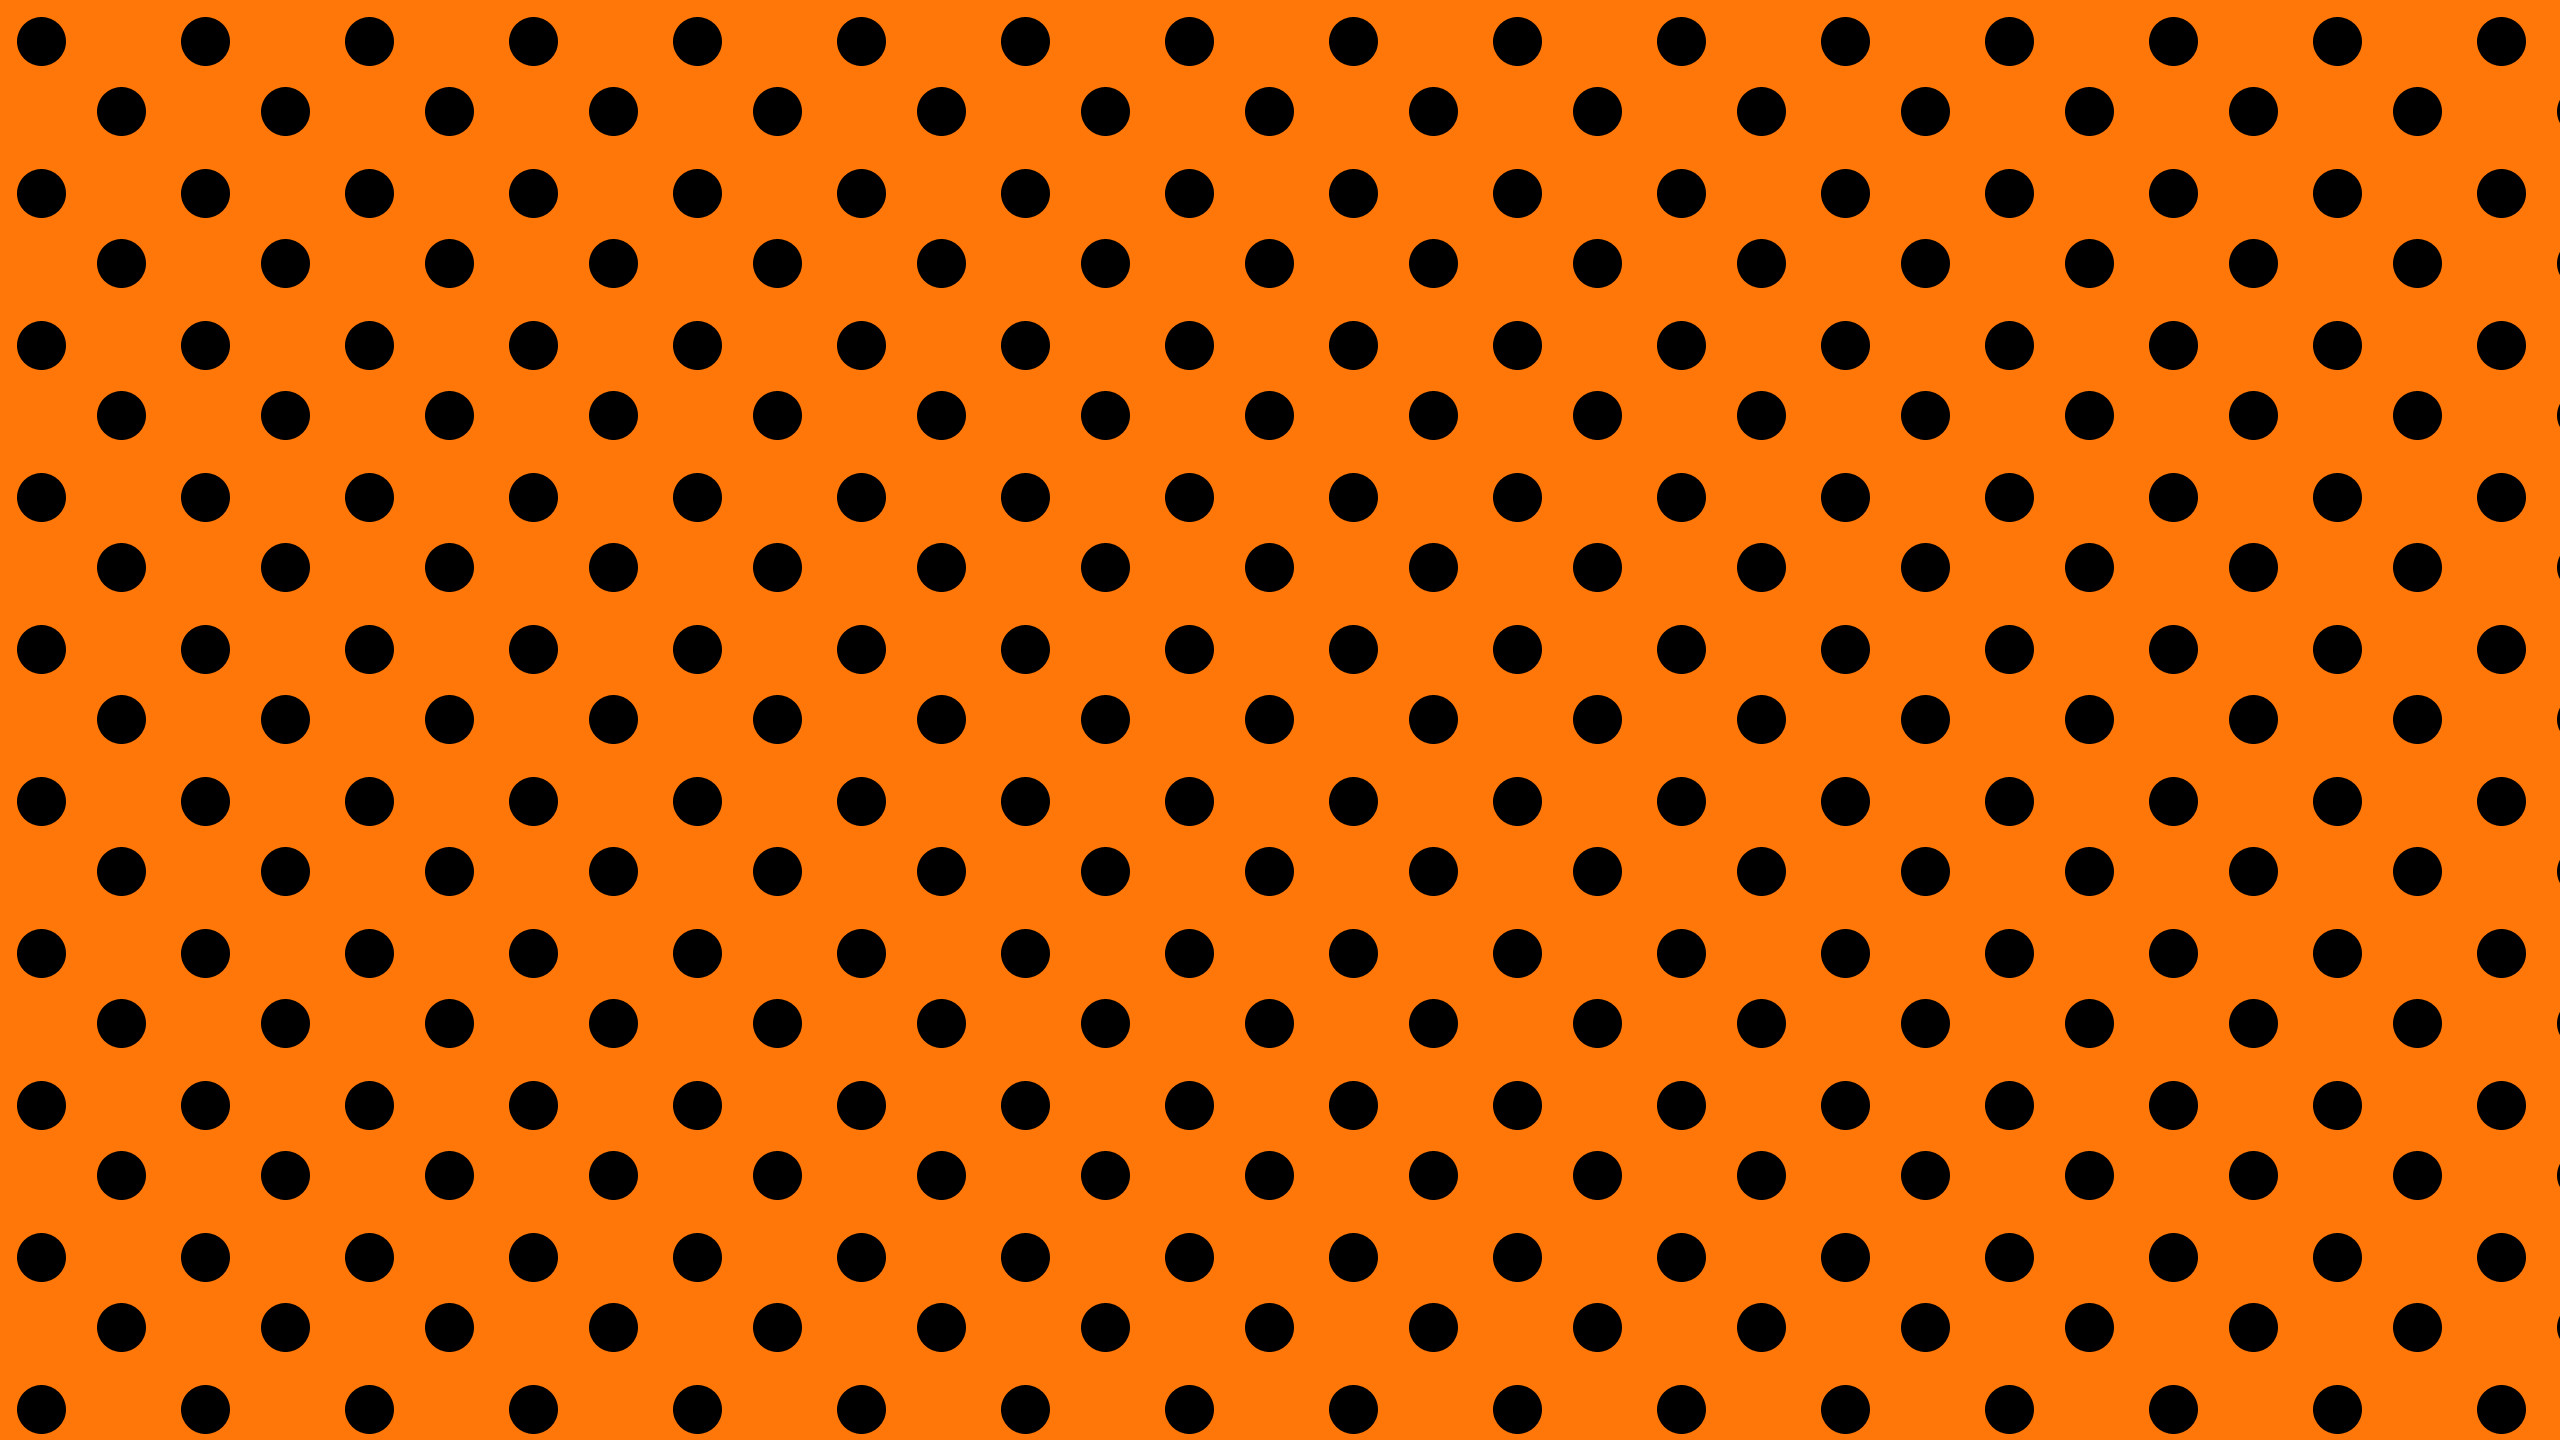 2560x1440 Orange and Black Wallpaper Background 61849